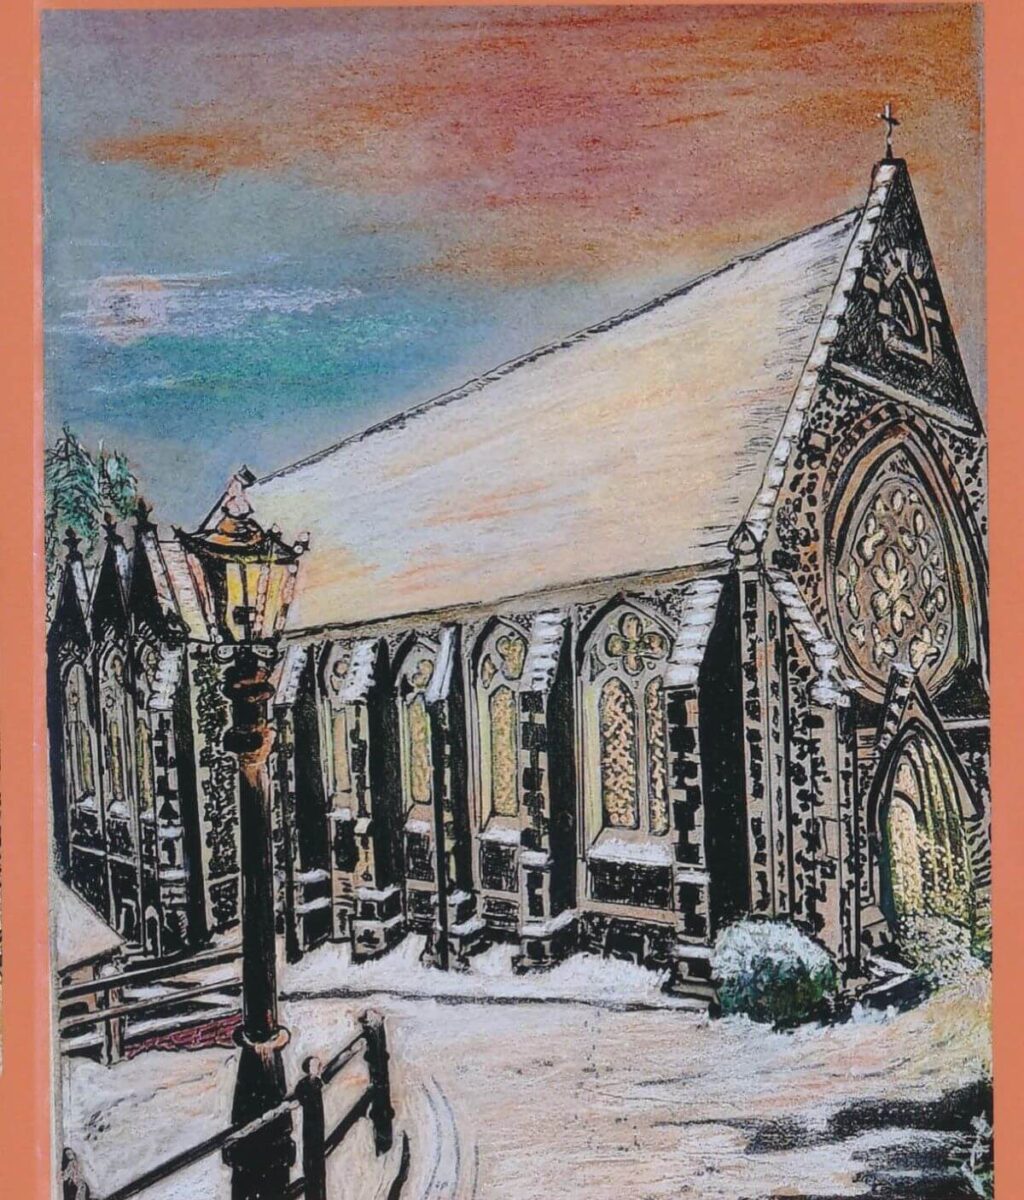 A snowy scene at a church